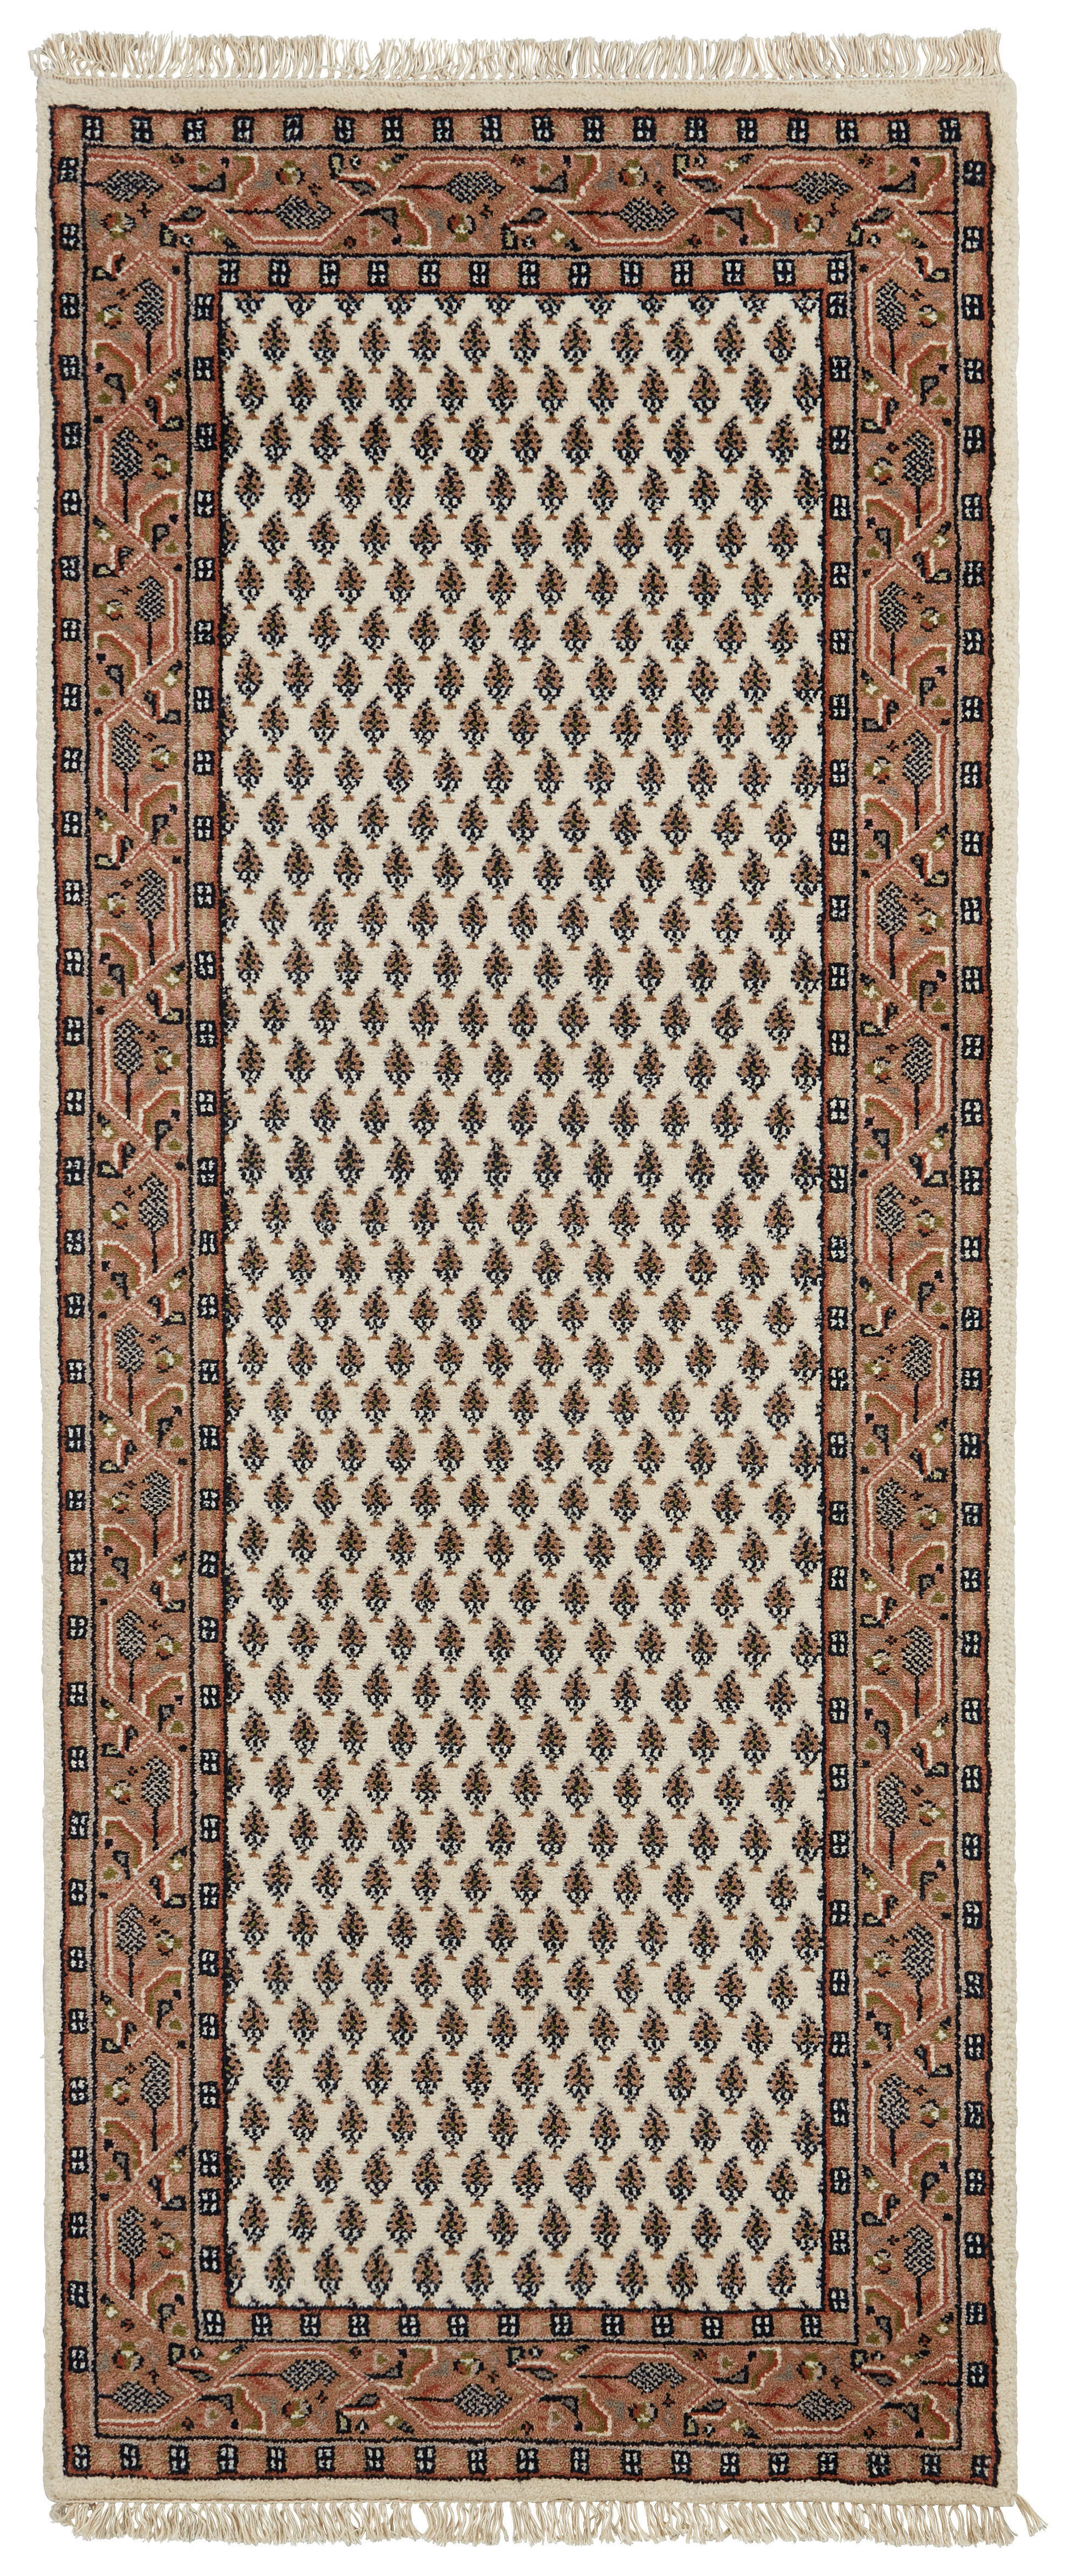 ORIENTALSKA PREPROGA  80/200 cm   rjava, krem  - rjava/krem, Trendi, tekstil (80/200cm) - Cazaris